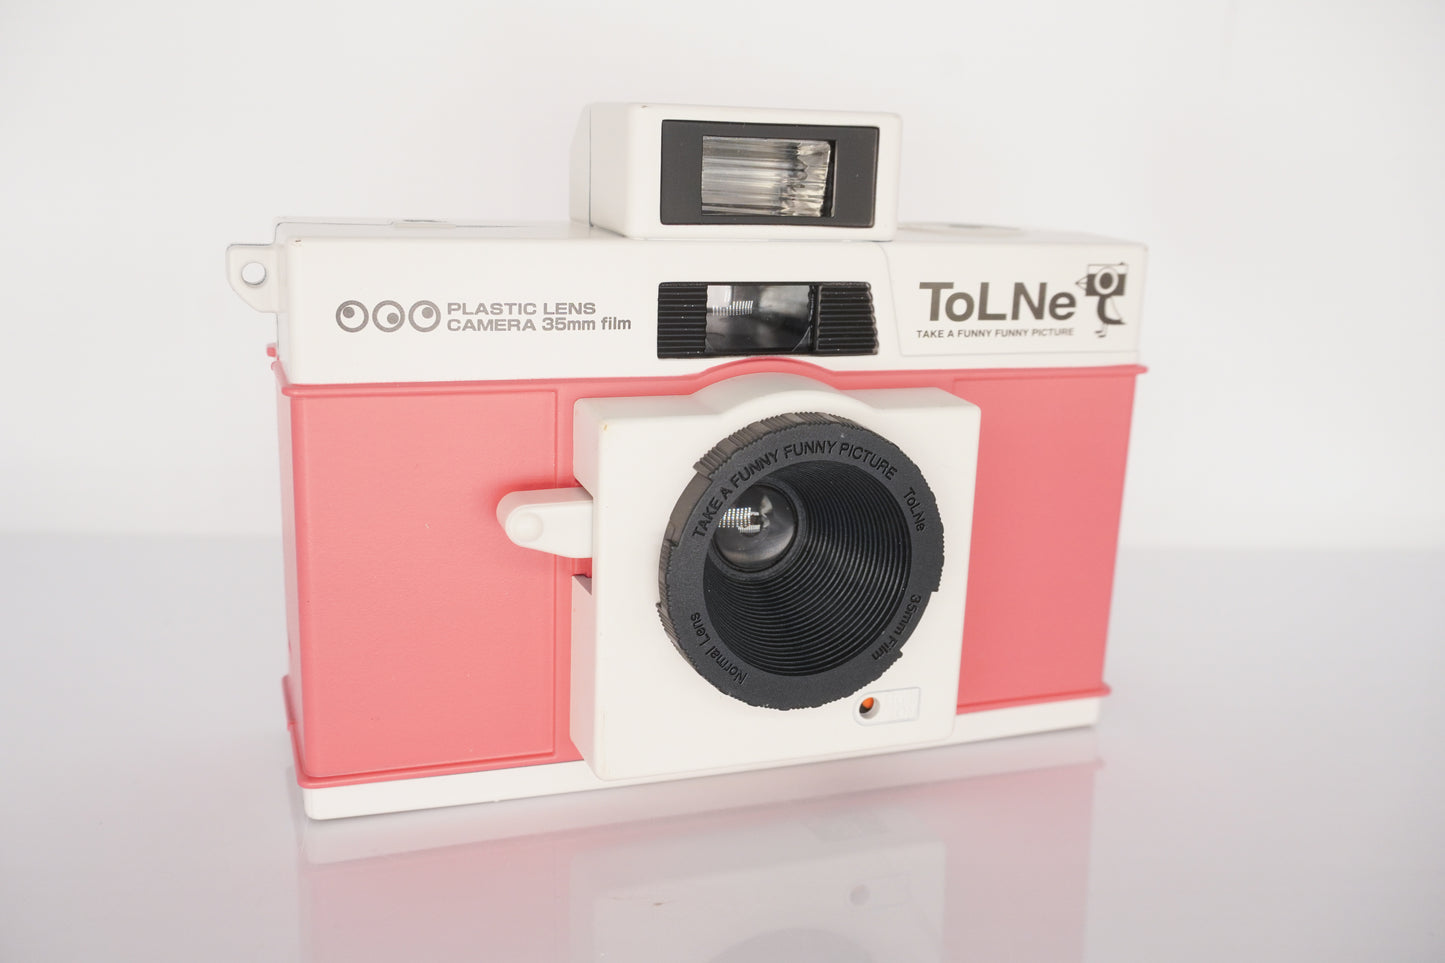 Holga K200NM Fisheye 35mm Film Reusable Camera